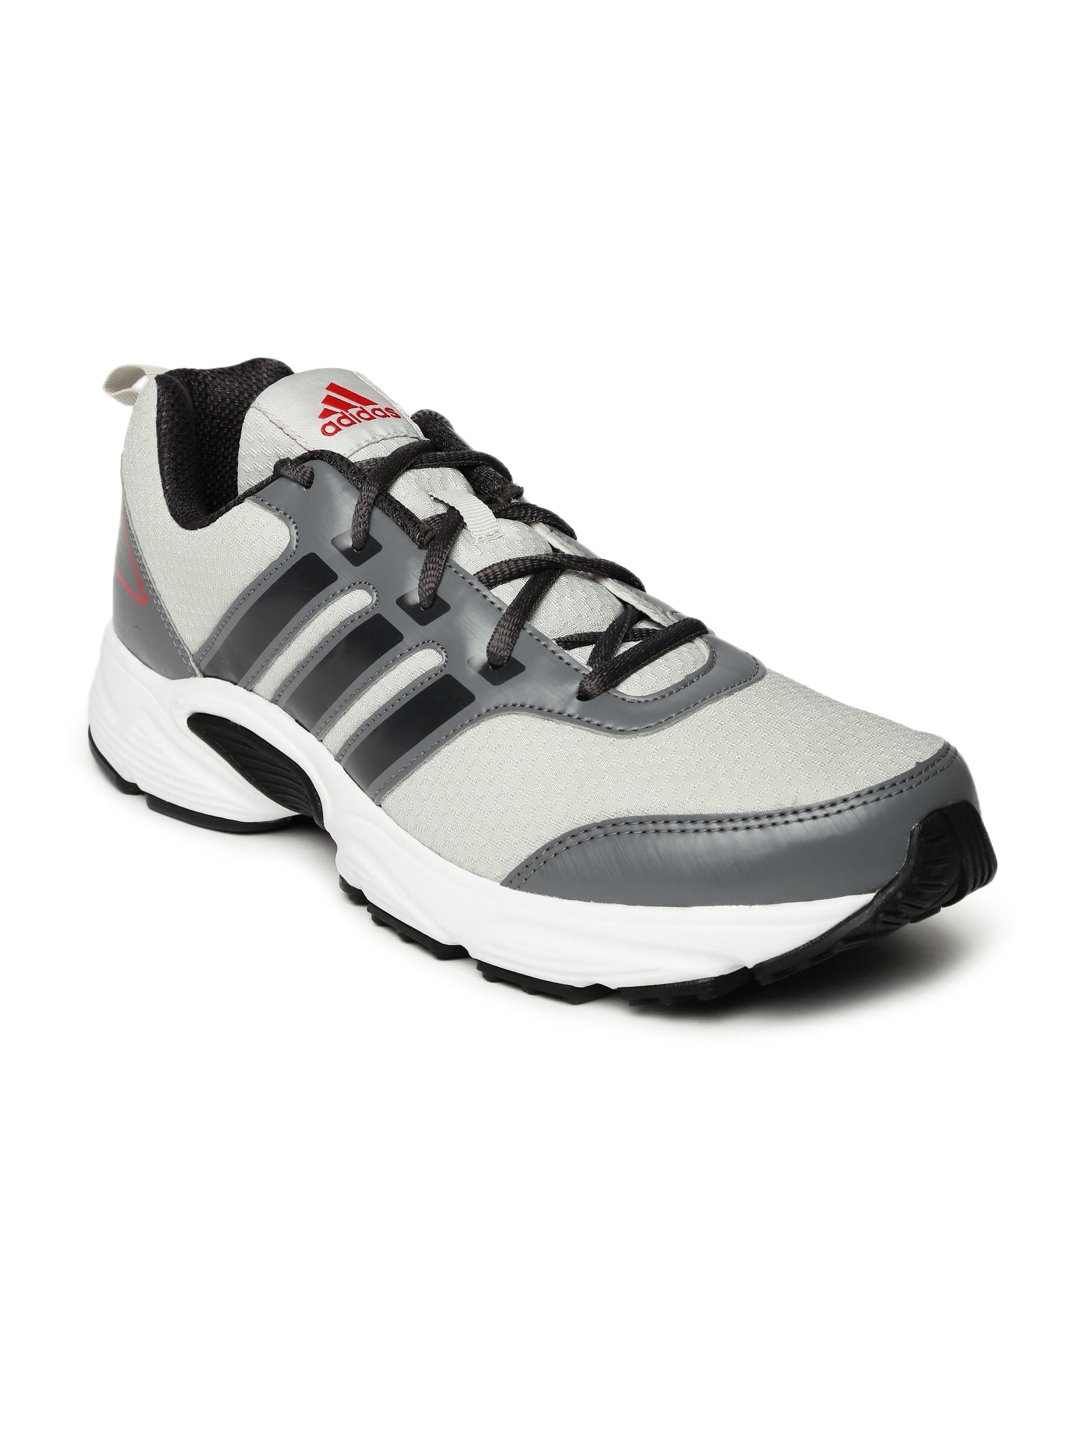 Buy ADIDAS Men Grey Ermis Running Shoes - Sports Shoes for Men 1461590 ...